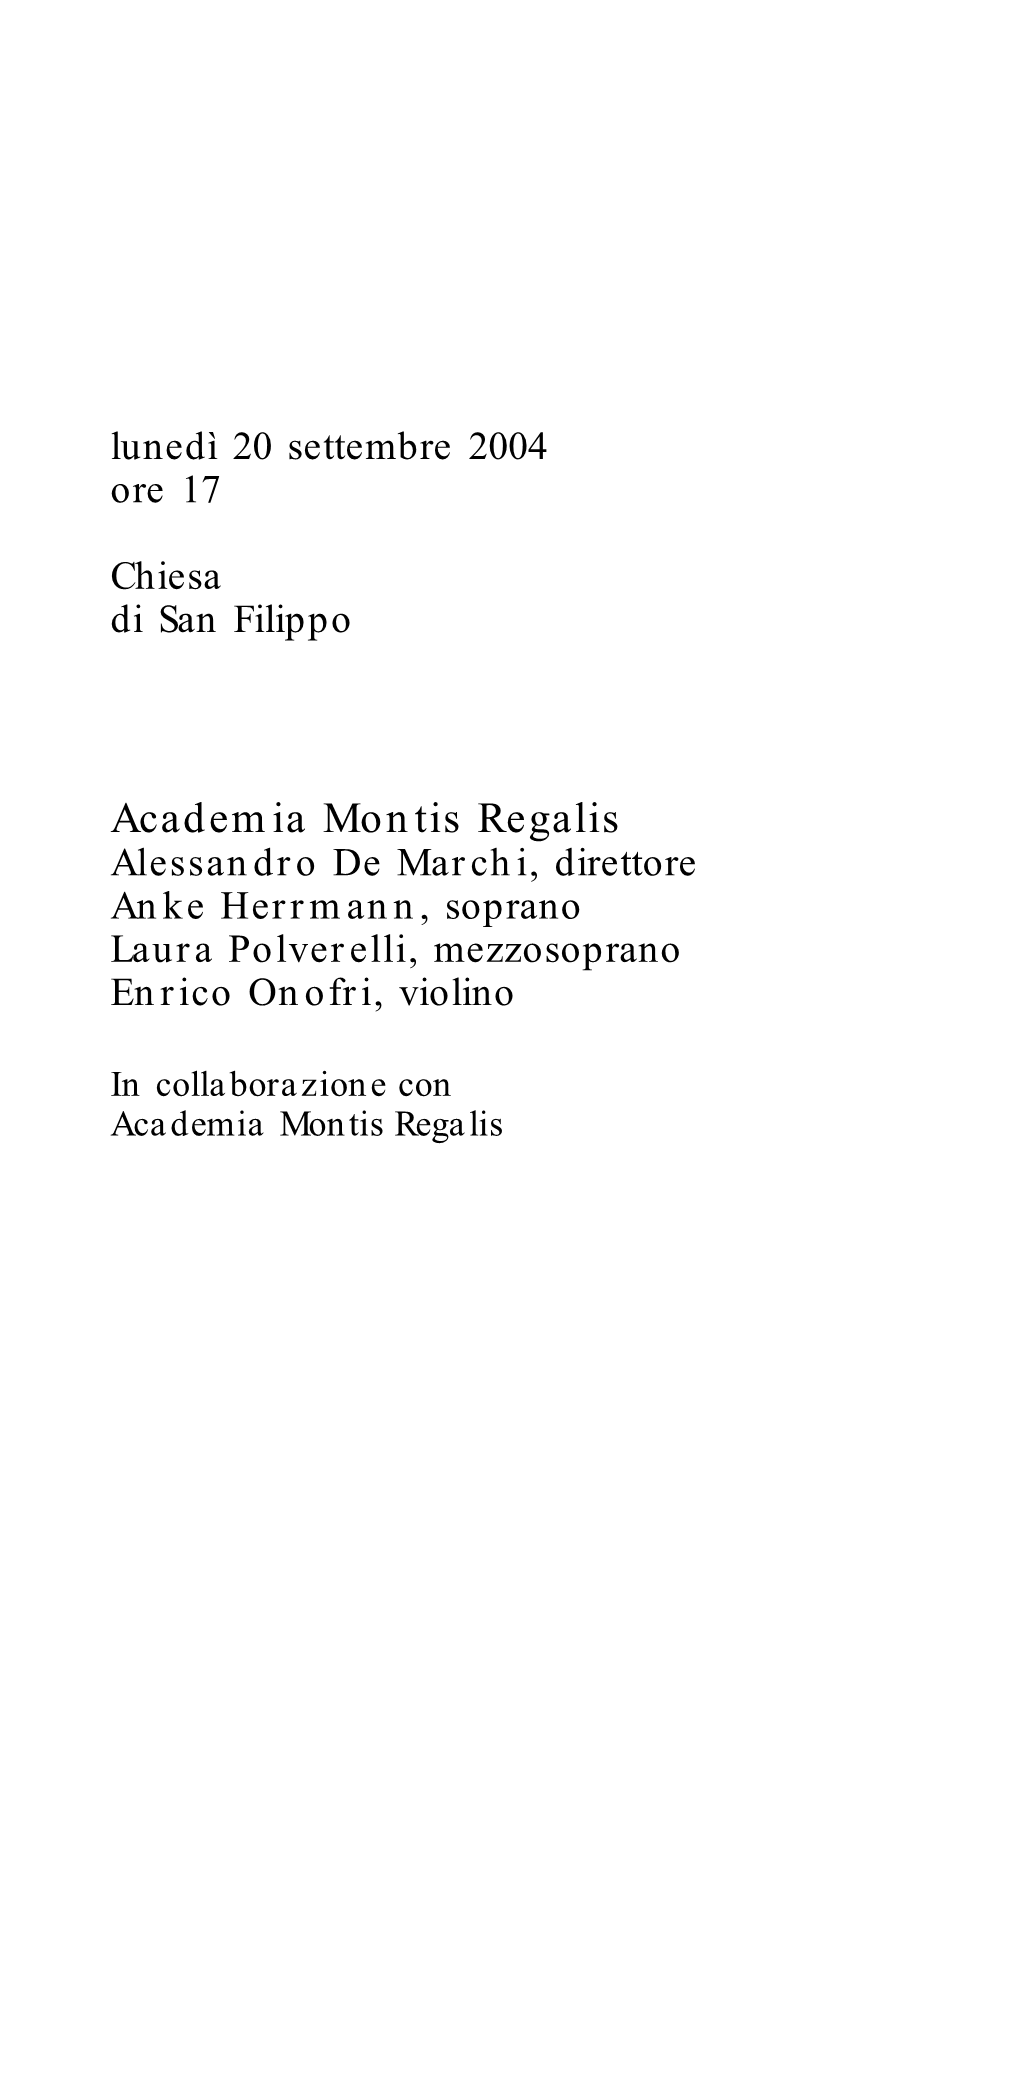 Academia Montis Regalis Alessandro De Marchi, Direttore Anke Herrmann, Soprano Laura Polverelli, Mezzosoprano Enrico Onofri, Violino